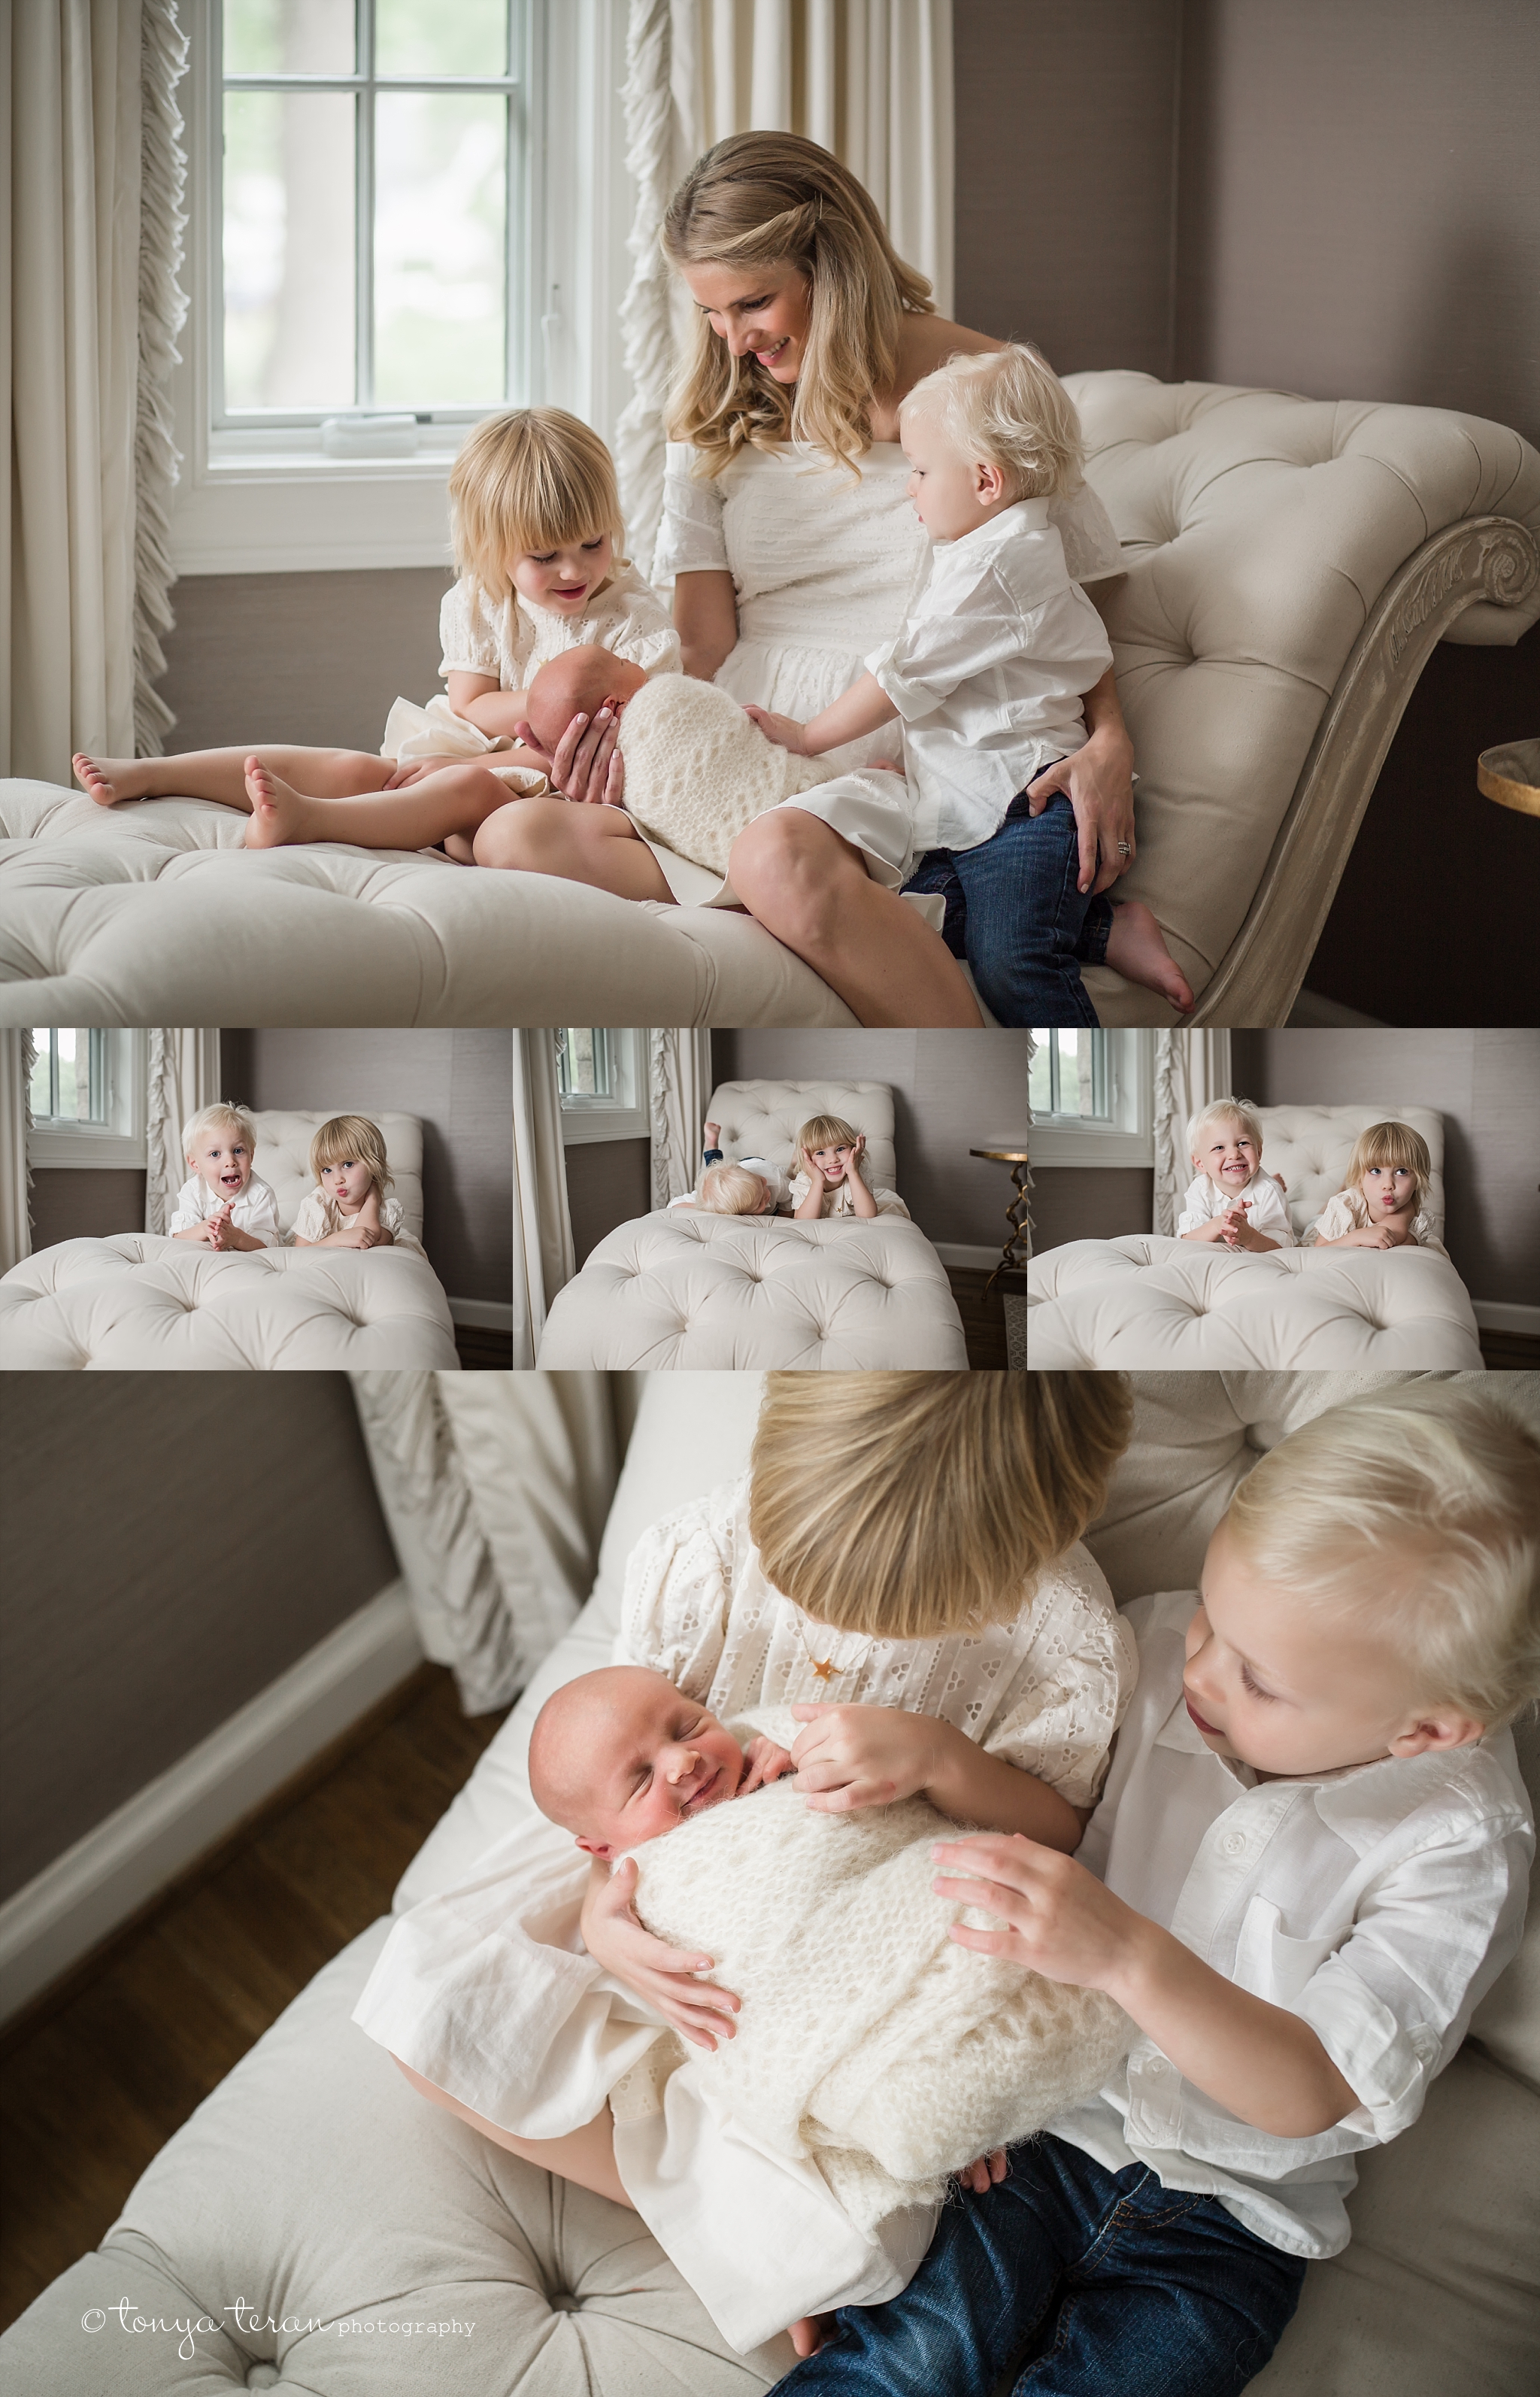 In-home Lifestyle Newborn Family Photo Session | Tonya Teran Photography, Washington, DC Newborn, Baby, and Family Photographer